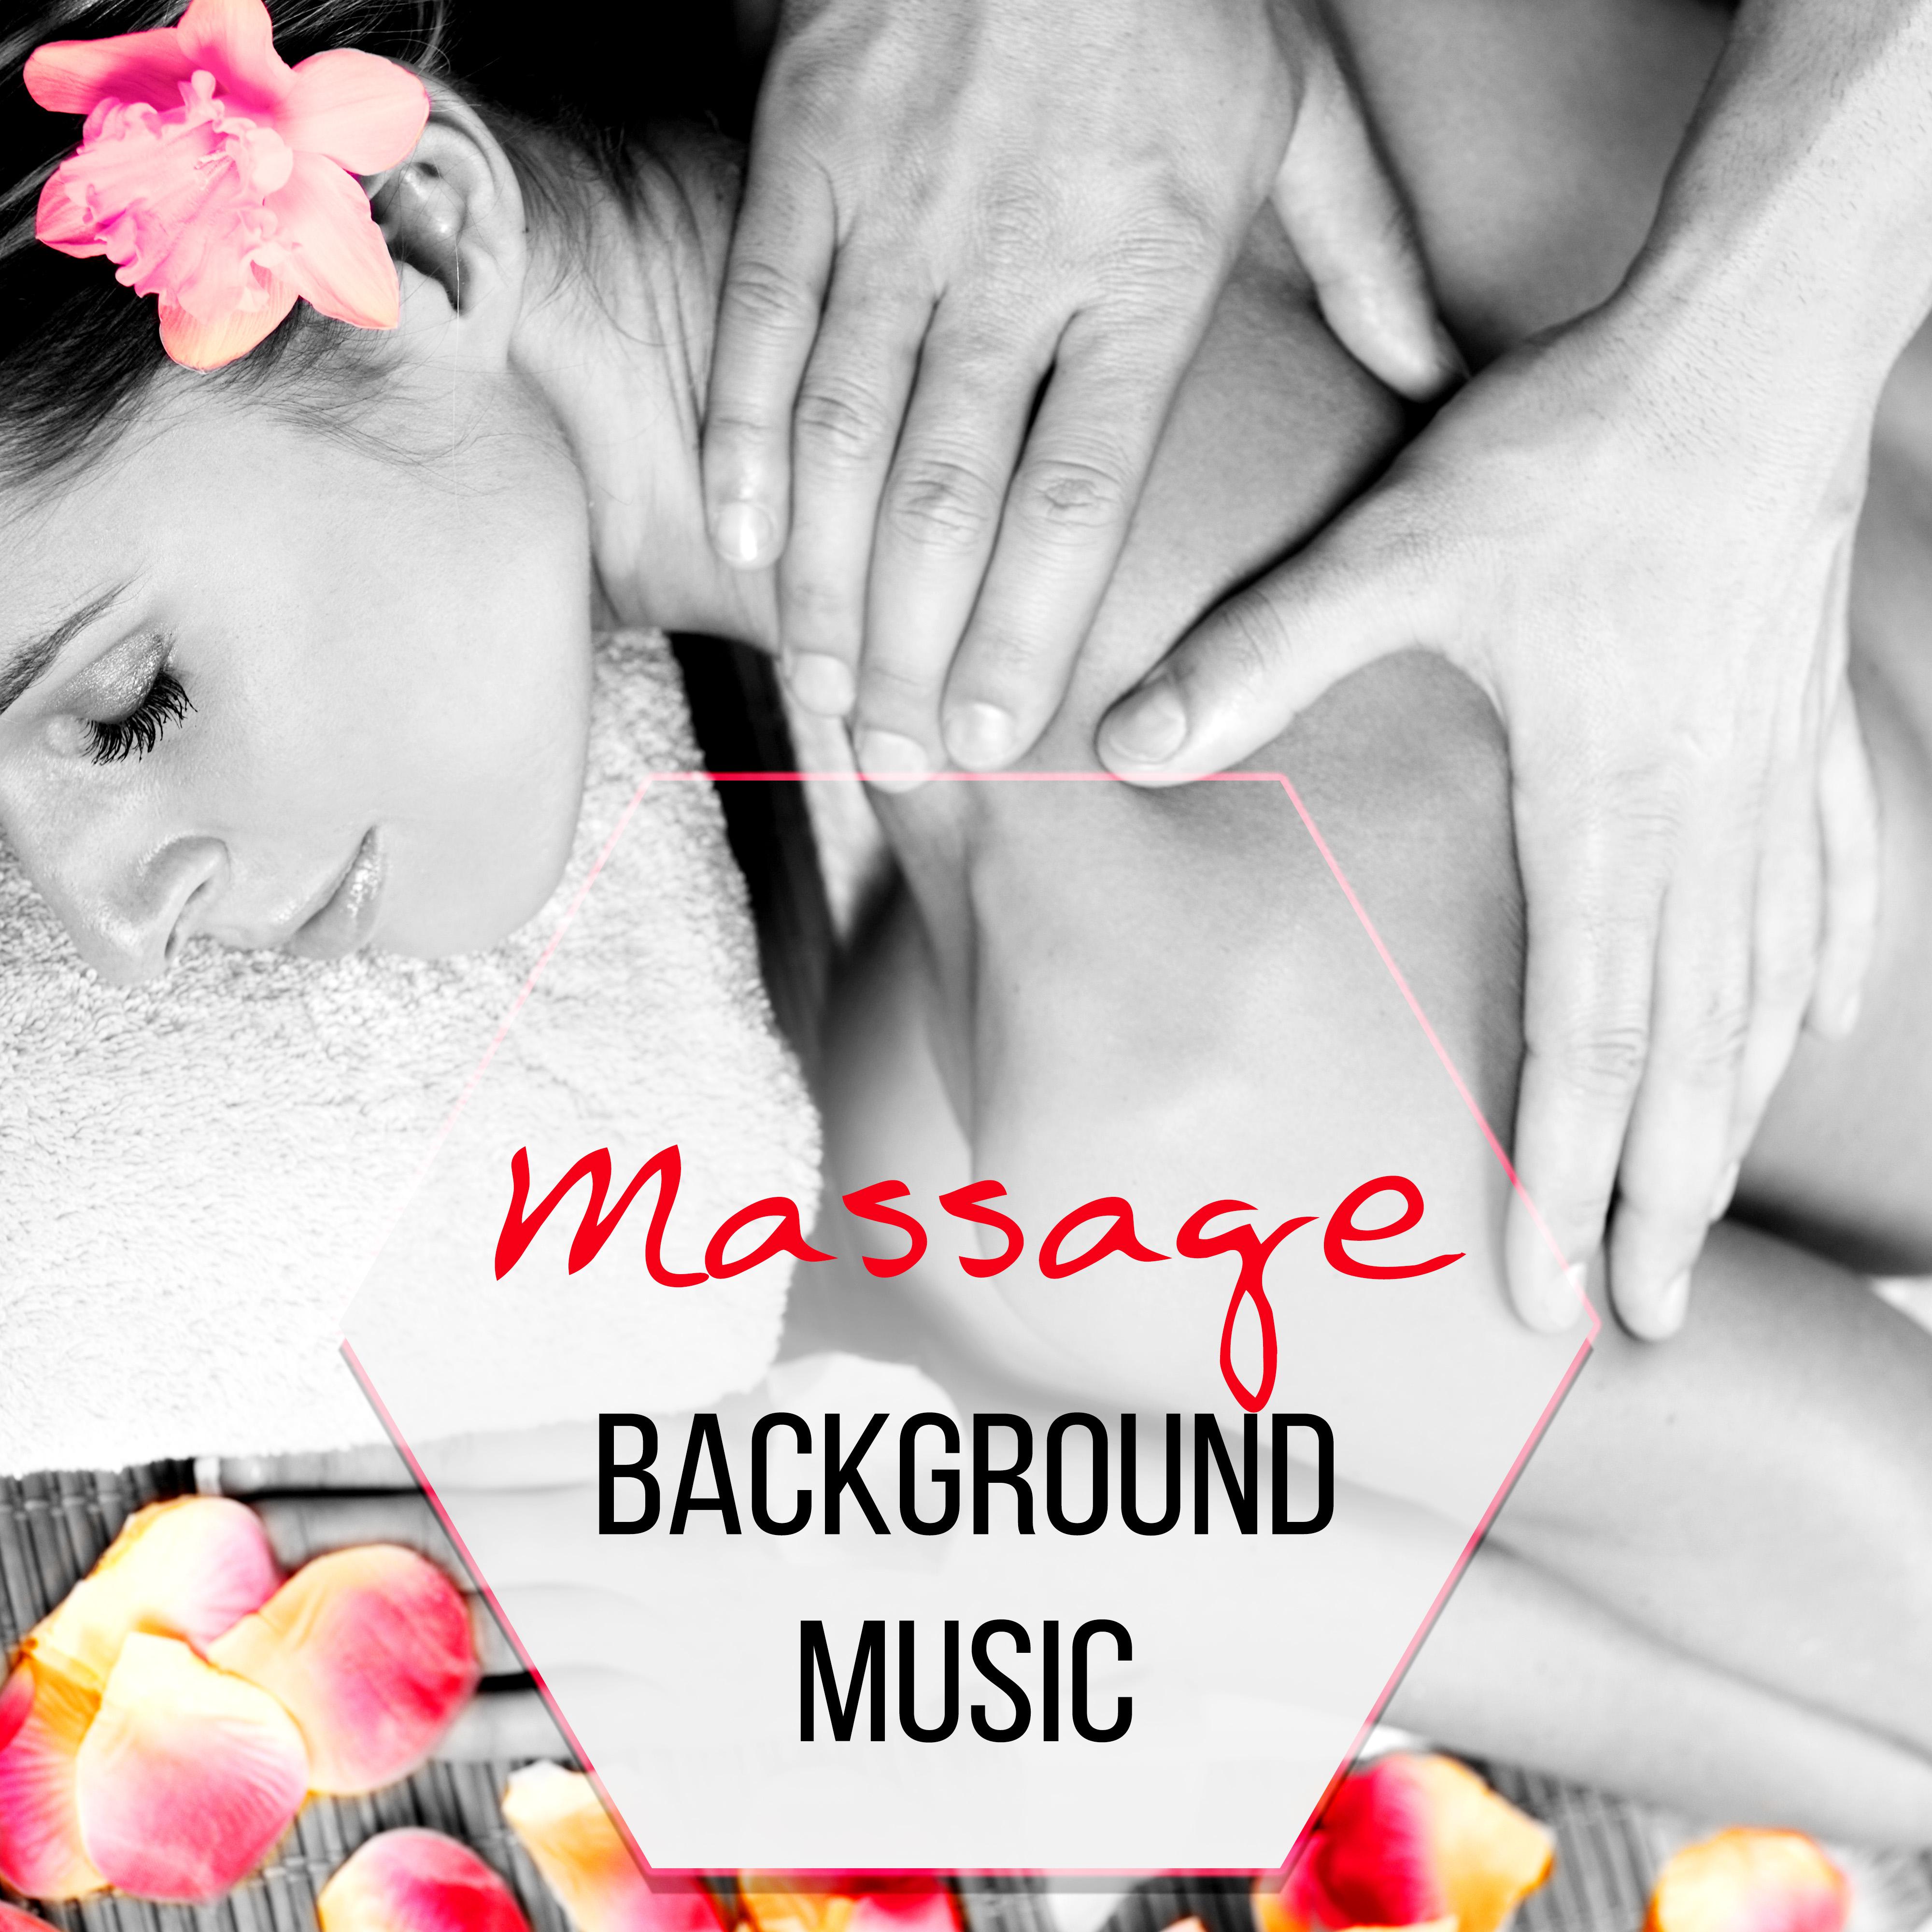 Massage Background Music  Relaxing Nature Sounds for Spa  Wellness Center, Ocean Waves, Birds, Crickets, Water Sounds, Falling Rain